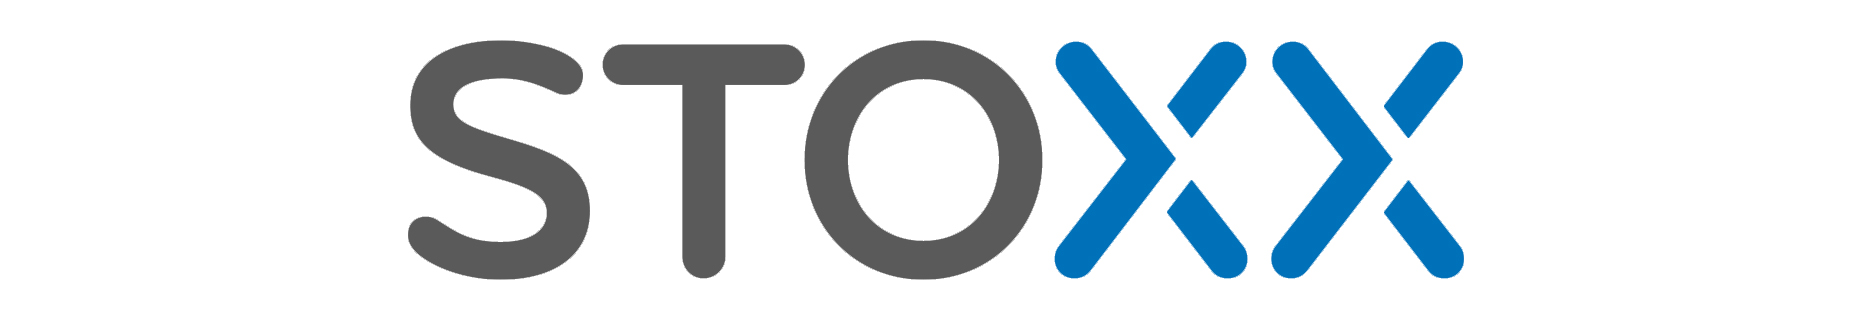 Display Image of STOXX